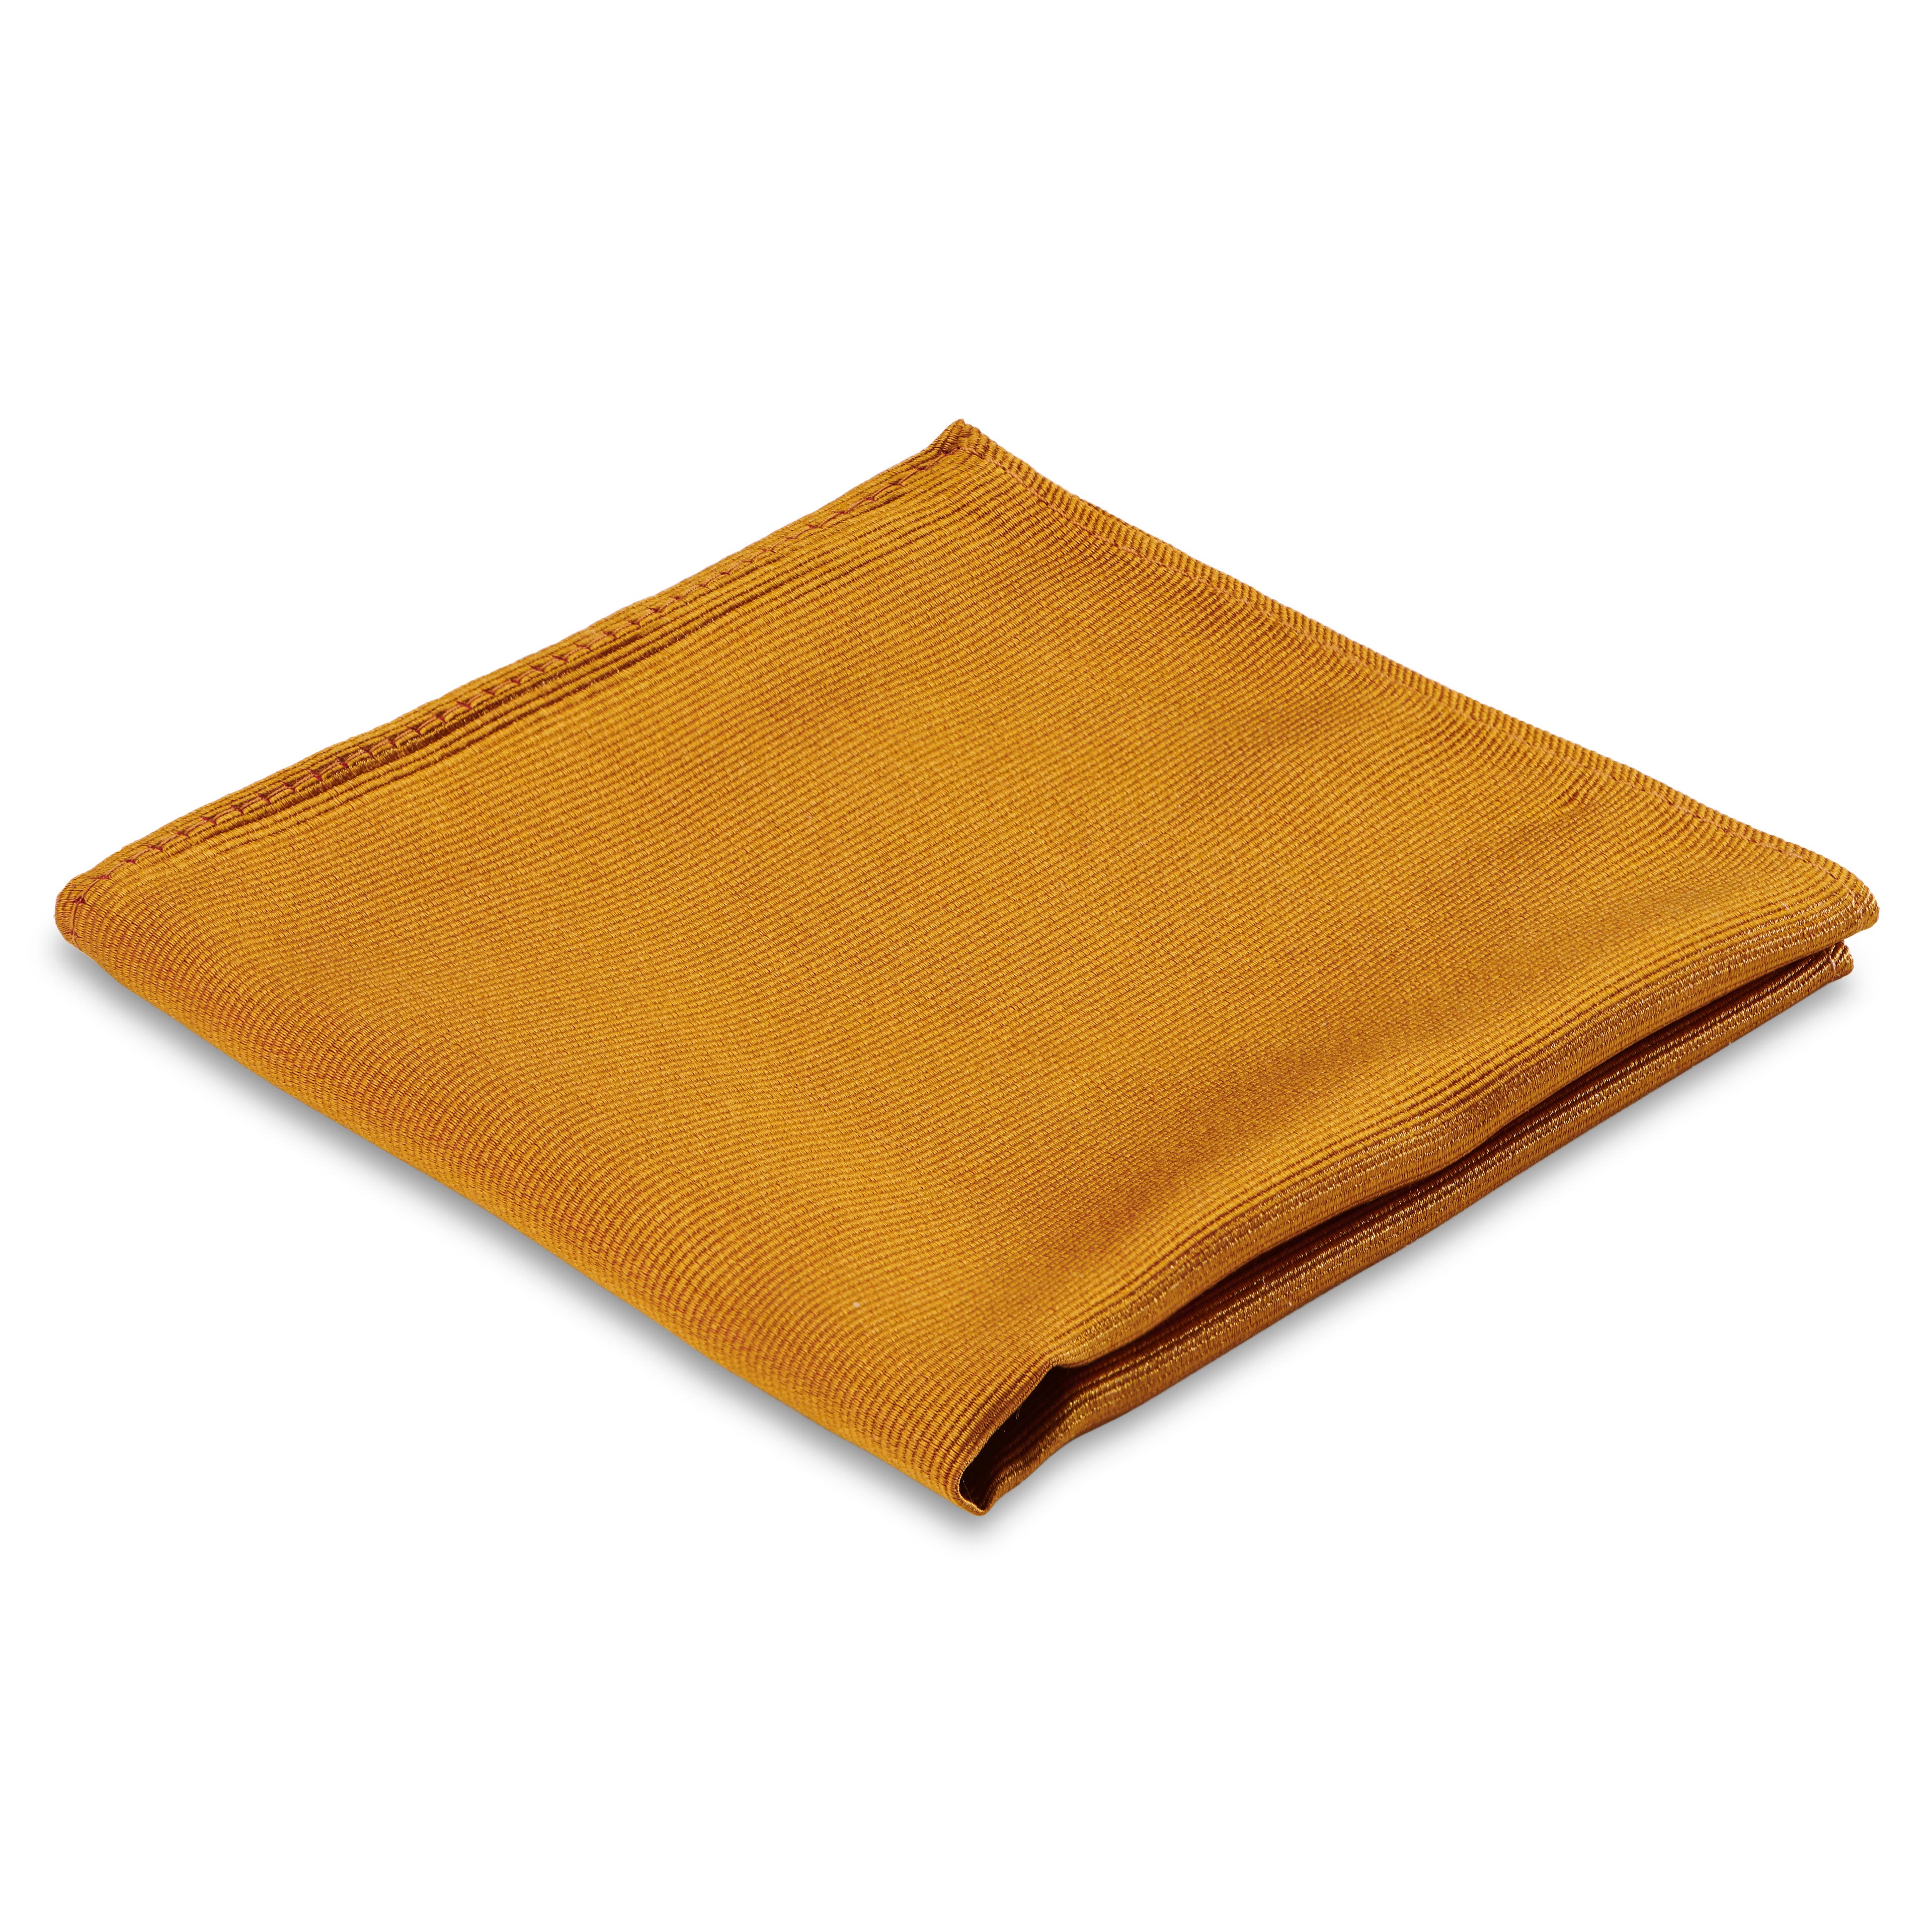 Pañuelo de bolsillo de sarga de seda dorado